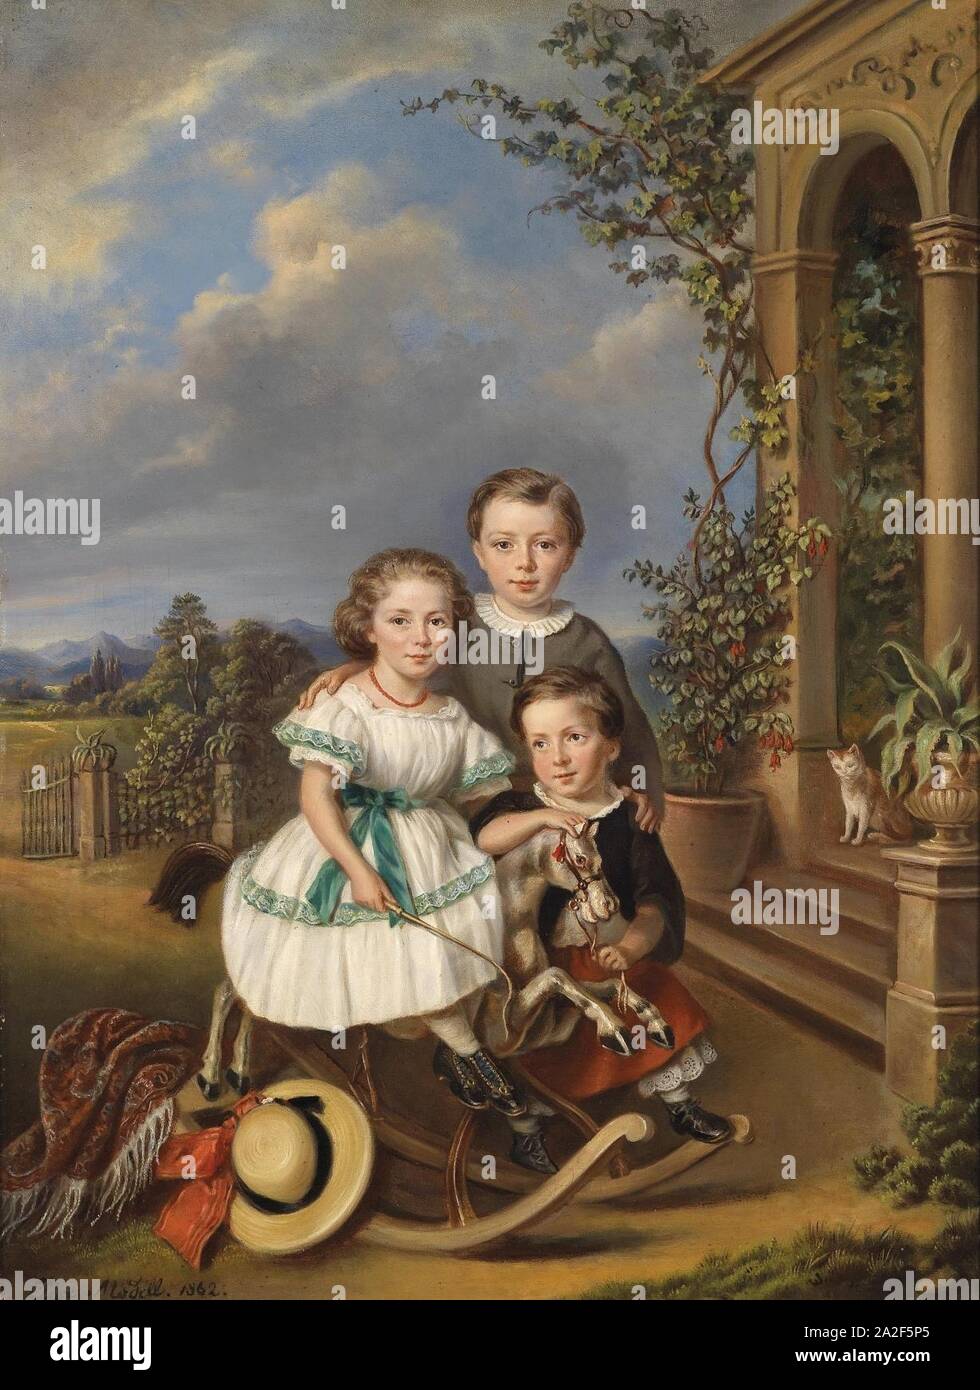 Elisabeth Modell Porträts dreier Kinder vor einem Gartenpavillon. Stock Photo